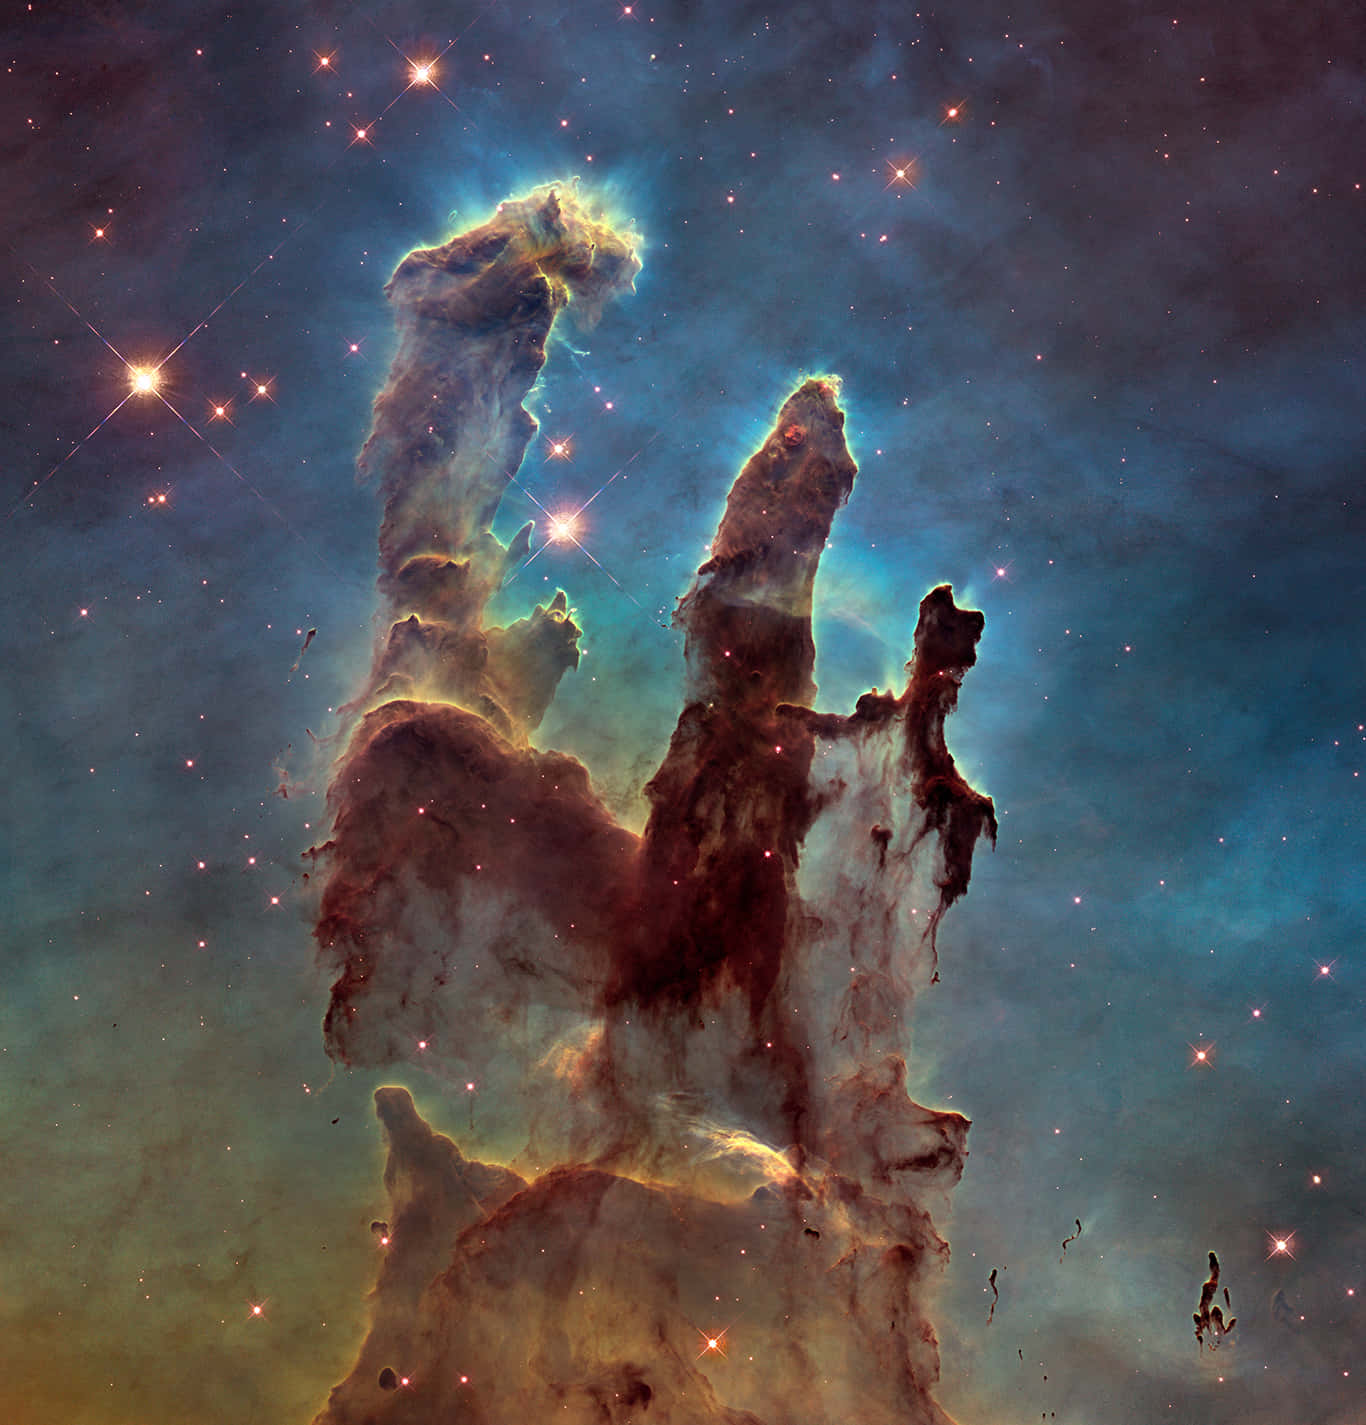 Imagensde Nebulosa